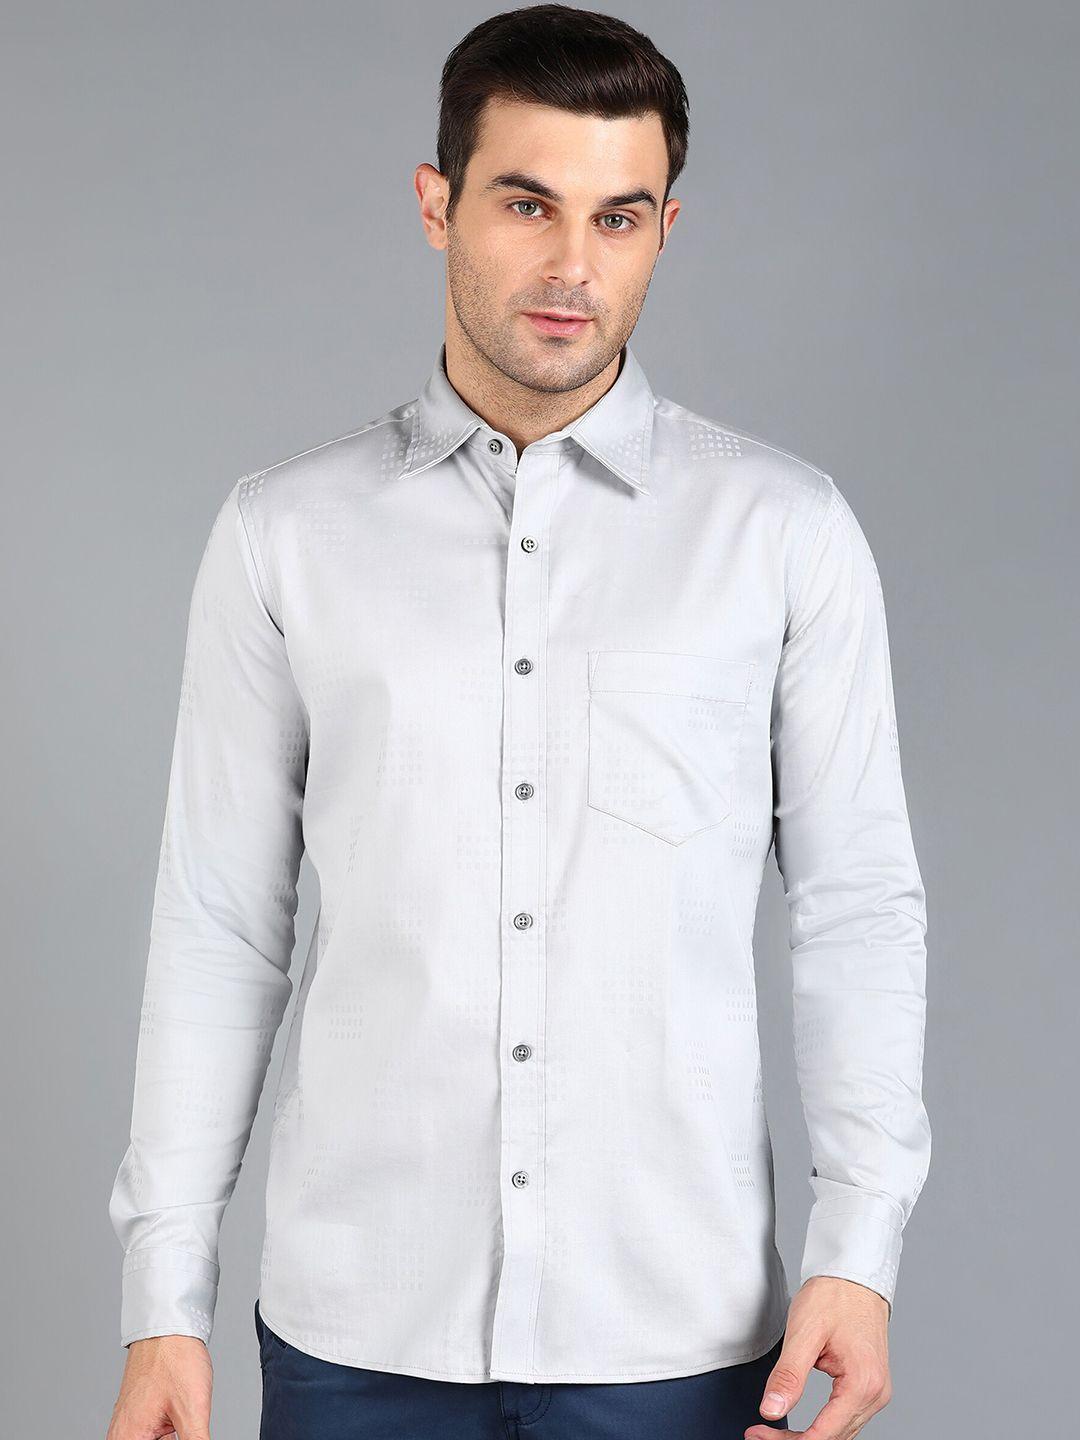 znx clothing men grey premium slim fit opaque formal shirt